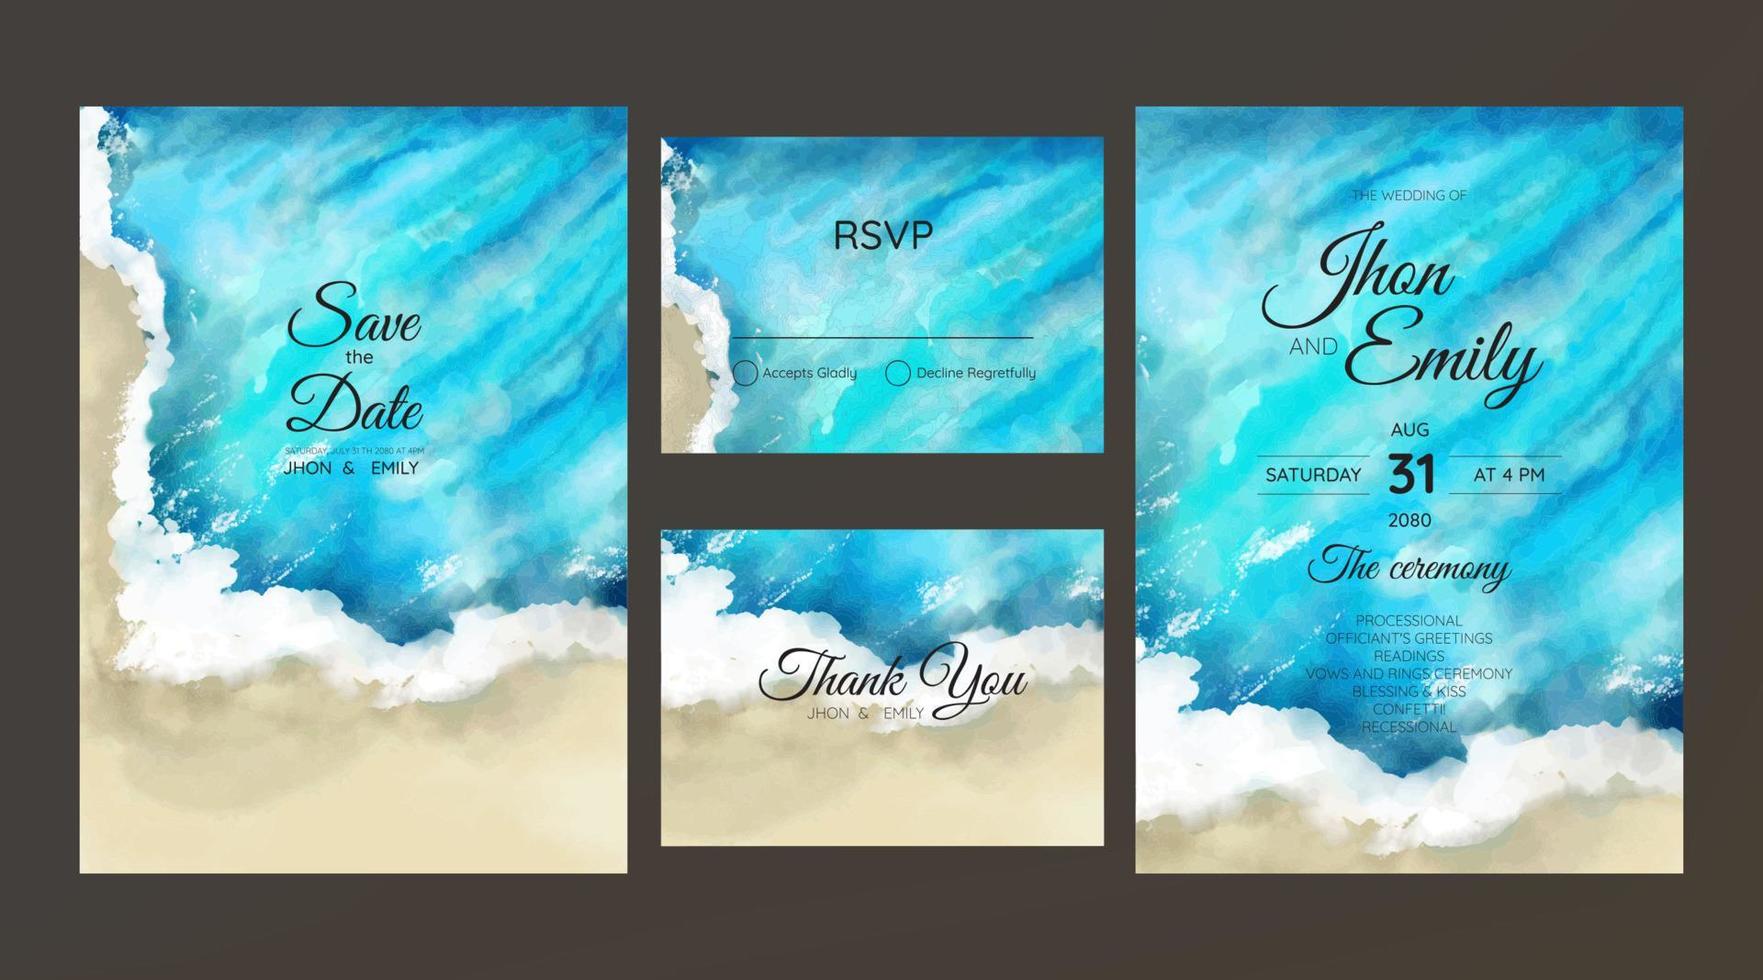 wedding cards, invitation. Save the date sea style design. Romantic beach wedding summer background vector